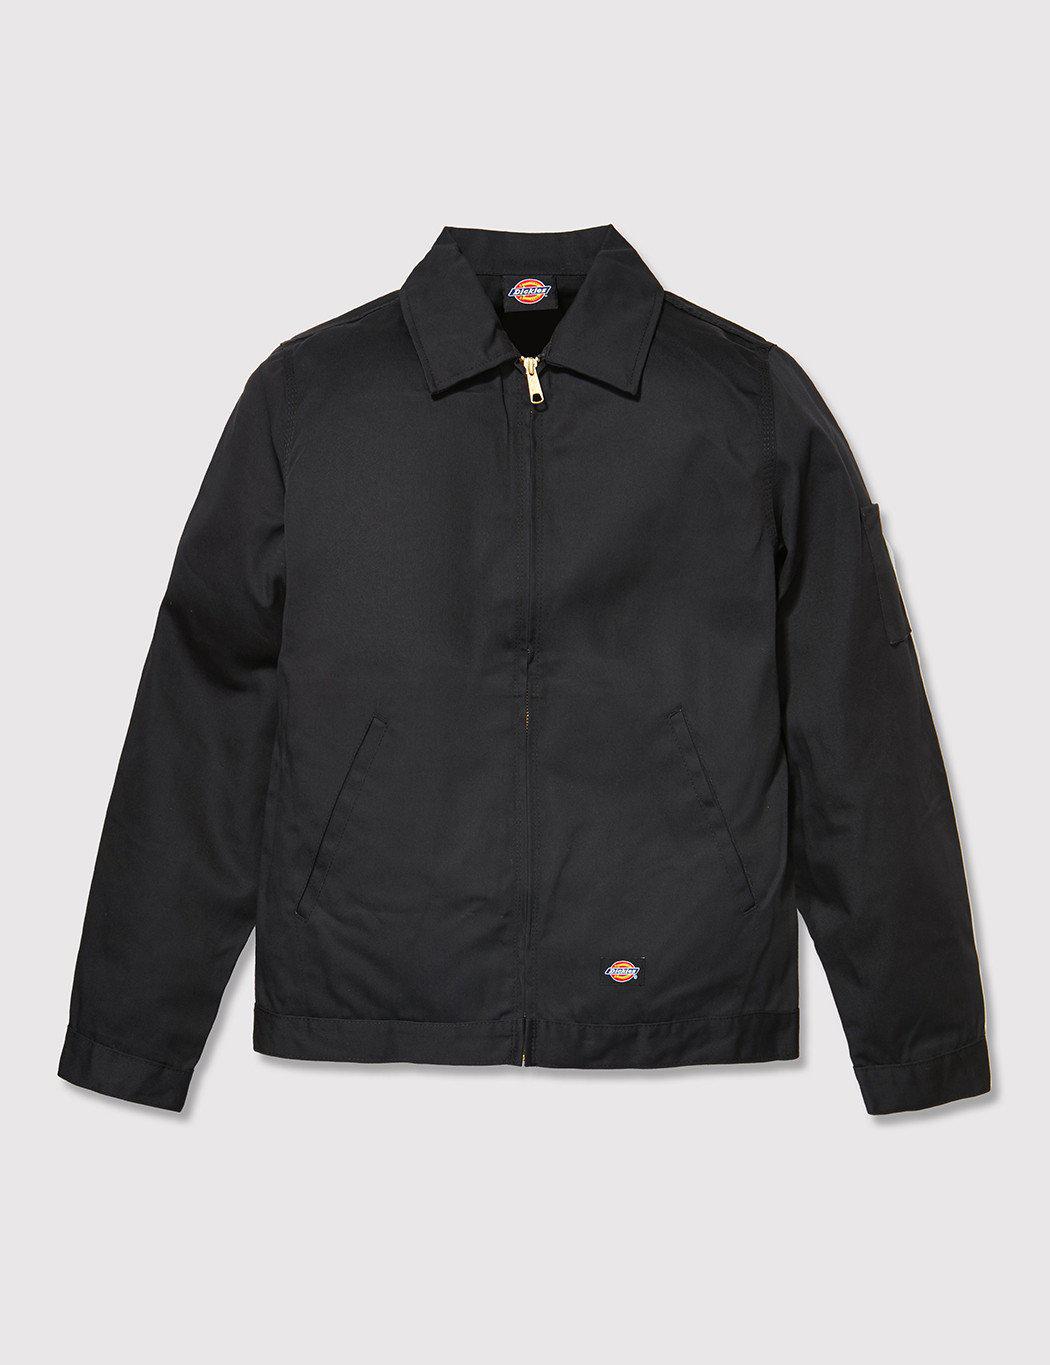 Dickies Cotton Unlined Eisenhower Jacket in Black for Men - Lyst